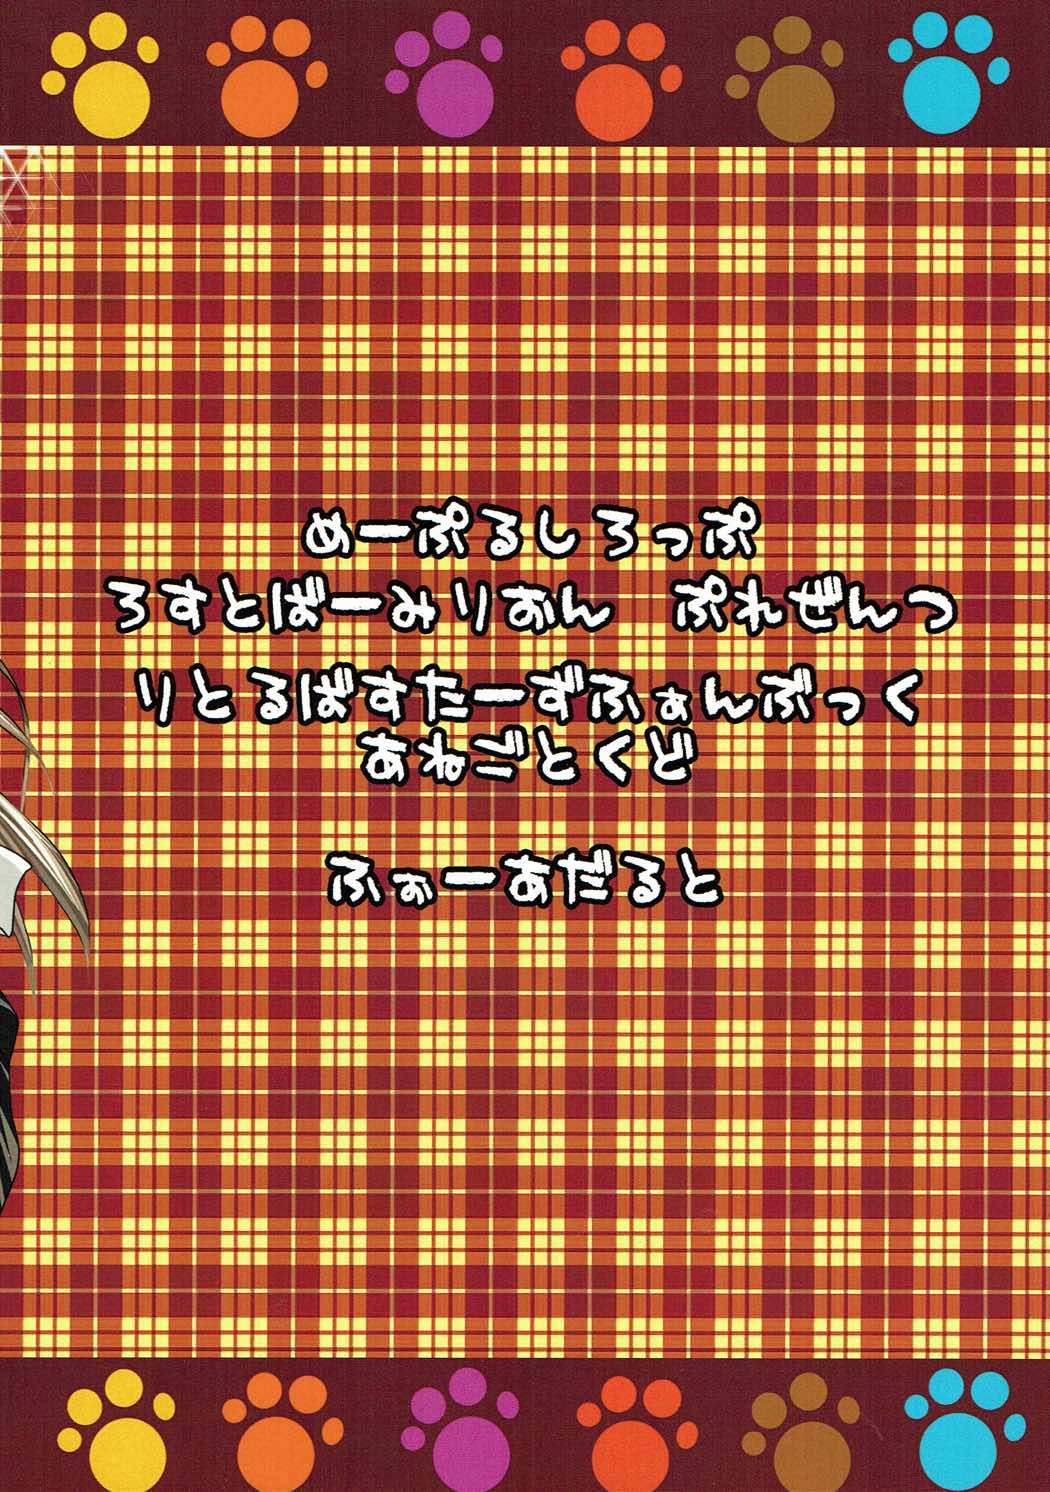 (CT15) [LOST VERMILLION (Kamiya Chiaki)] Maple Syrup (Little Busters!) (こみトレ15) [LOST VERMILLION (神谷ちあき)] メープルシロップ (リトルバスターズ!)